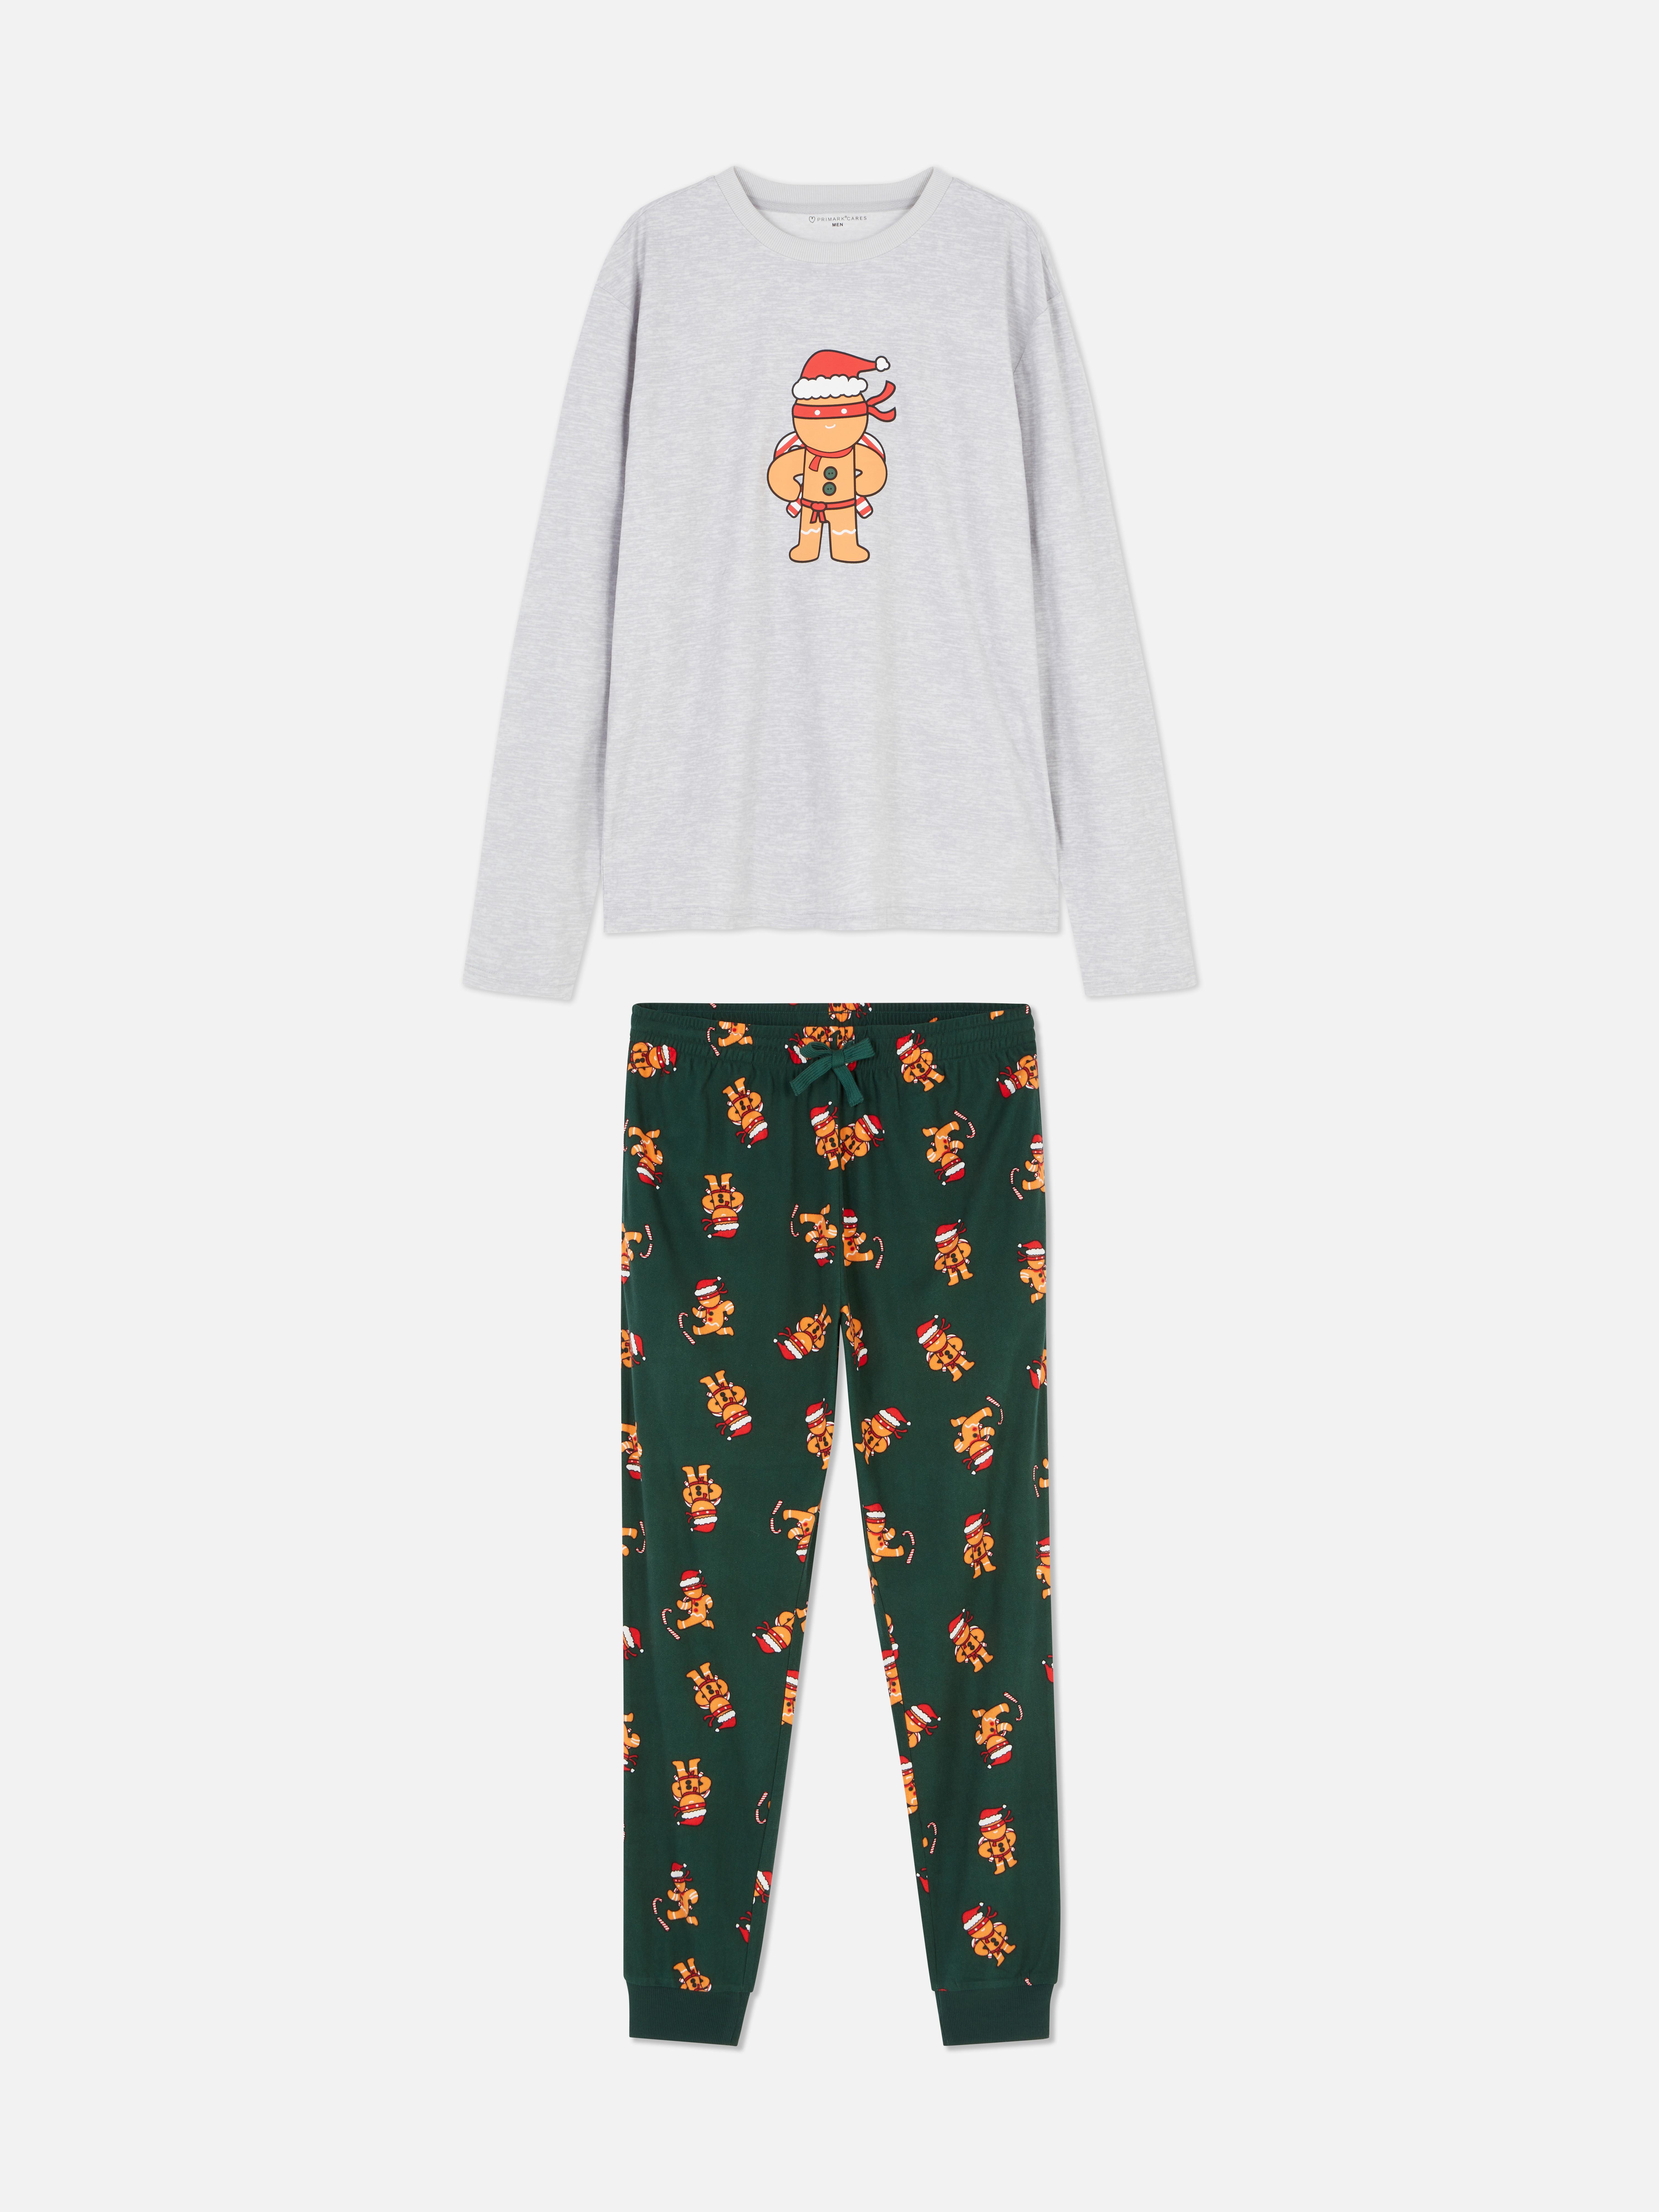 Gingerbread Man Pajama Set